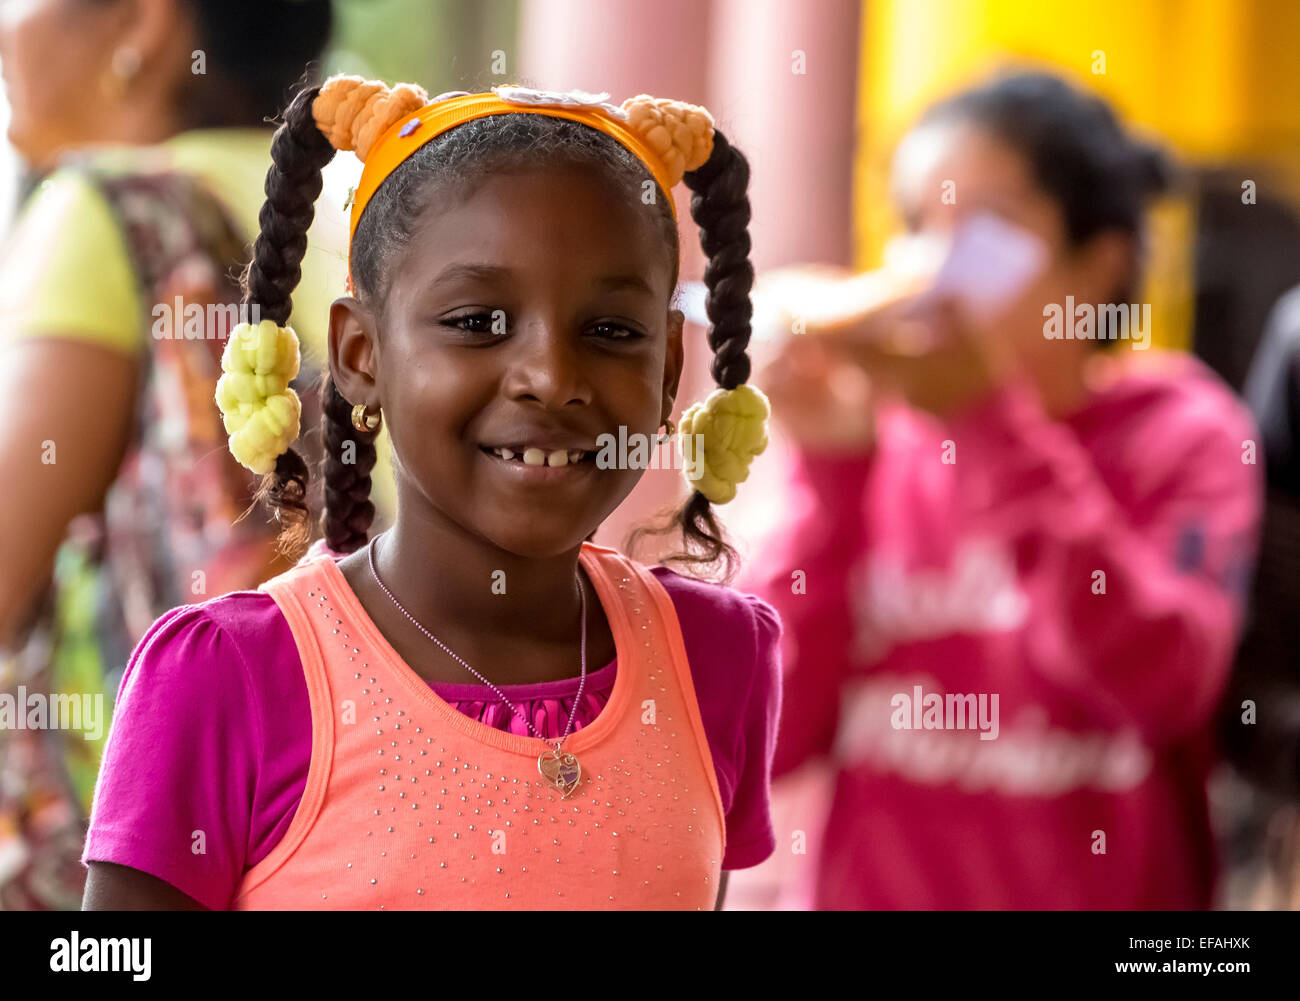 Girl with pigtails, Viñales, Pinar del Rio Province, Cuba Stock Photo